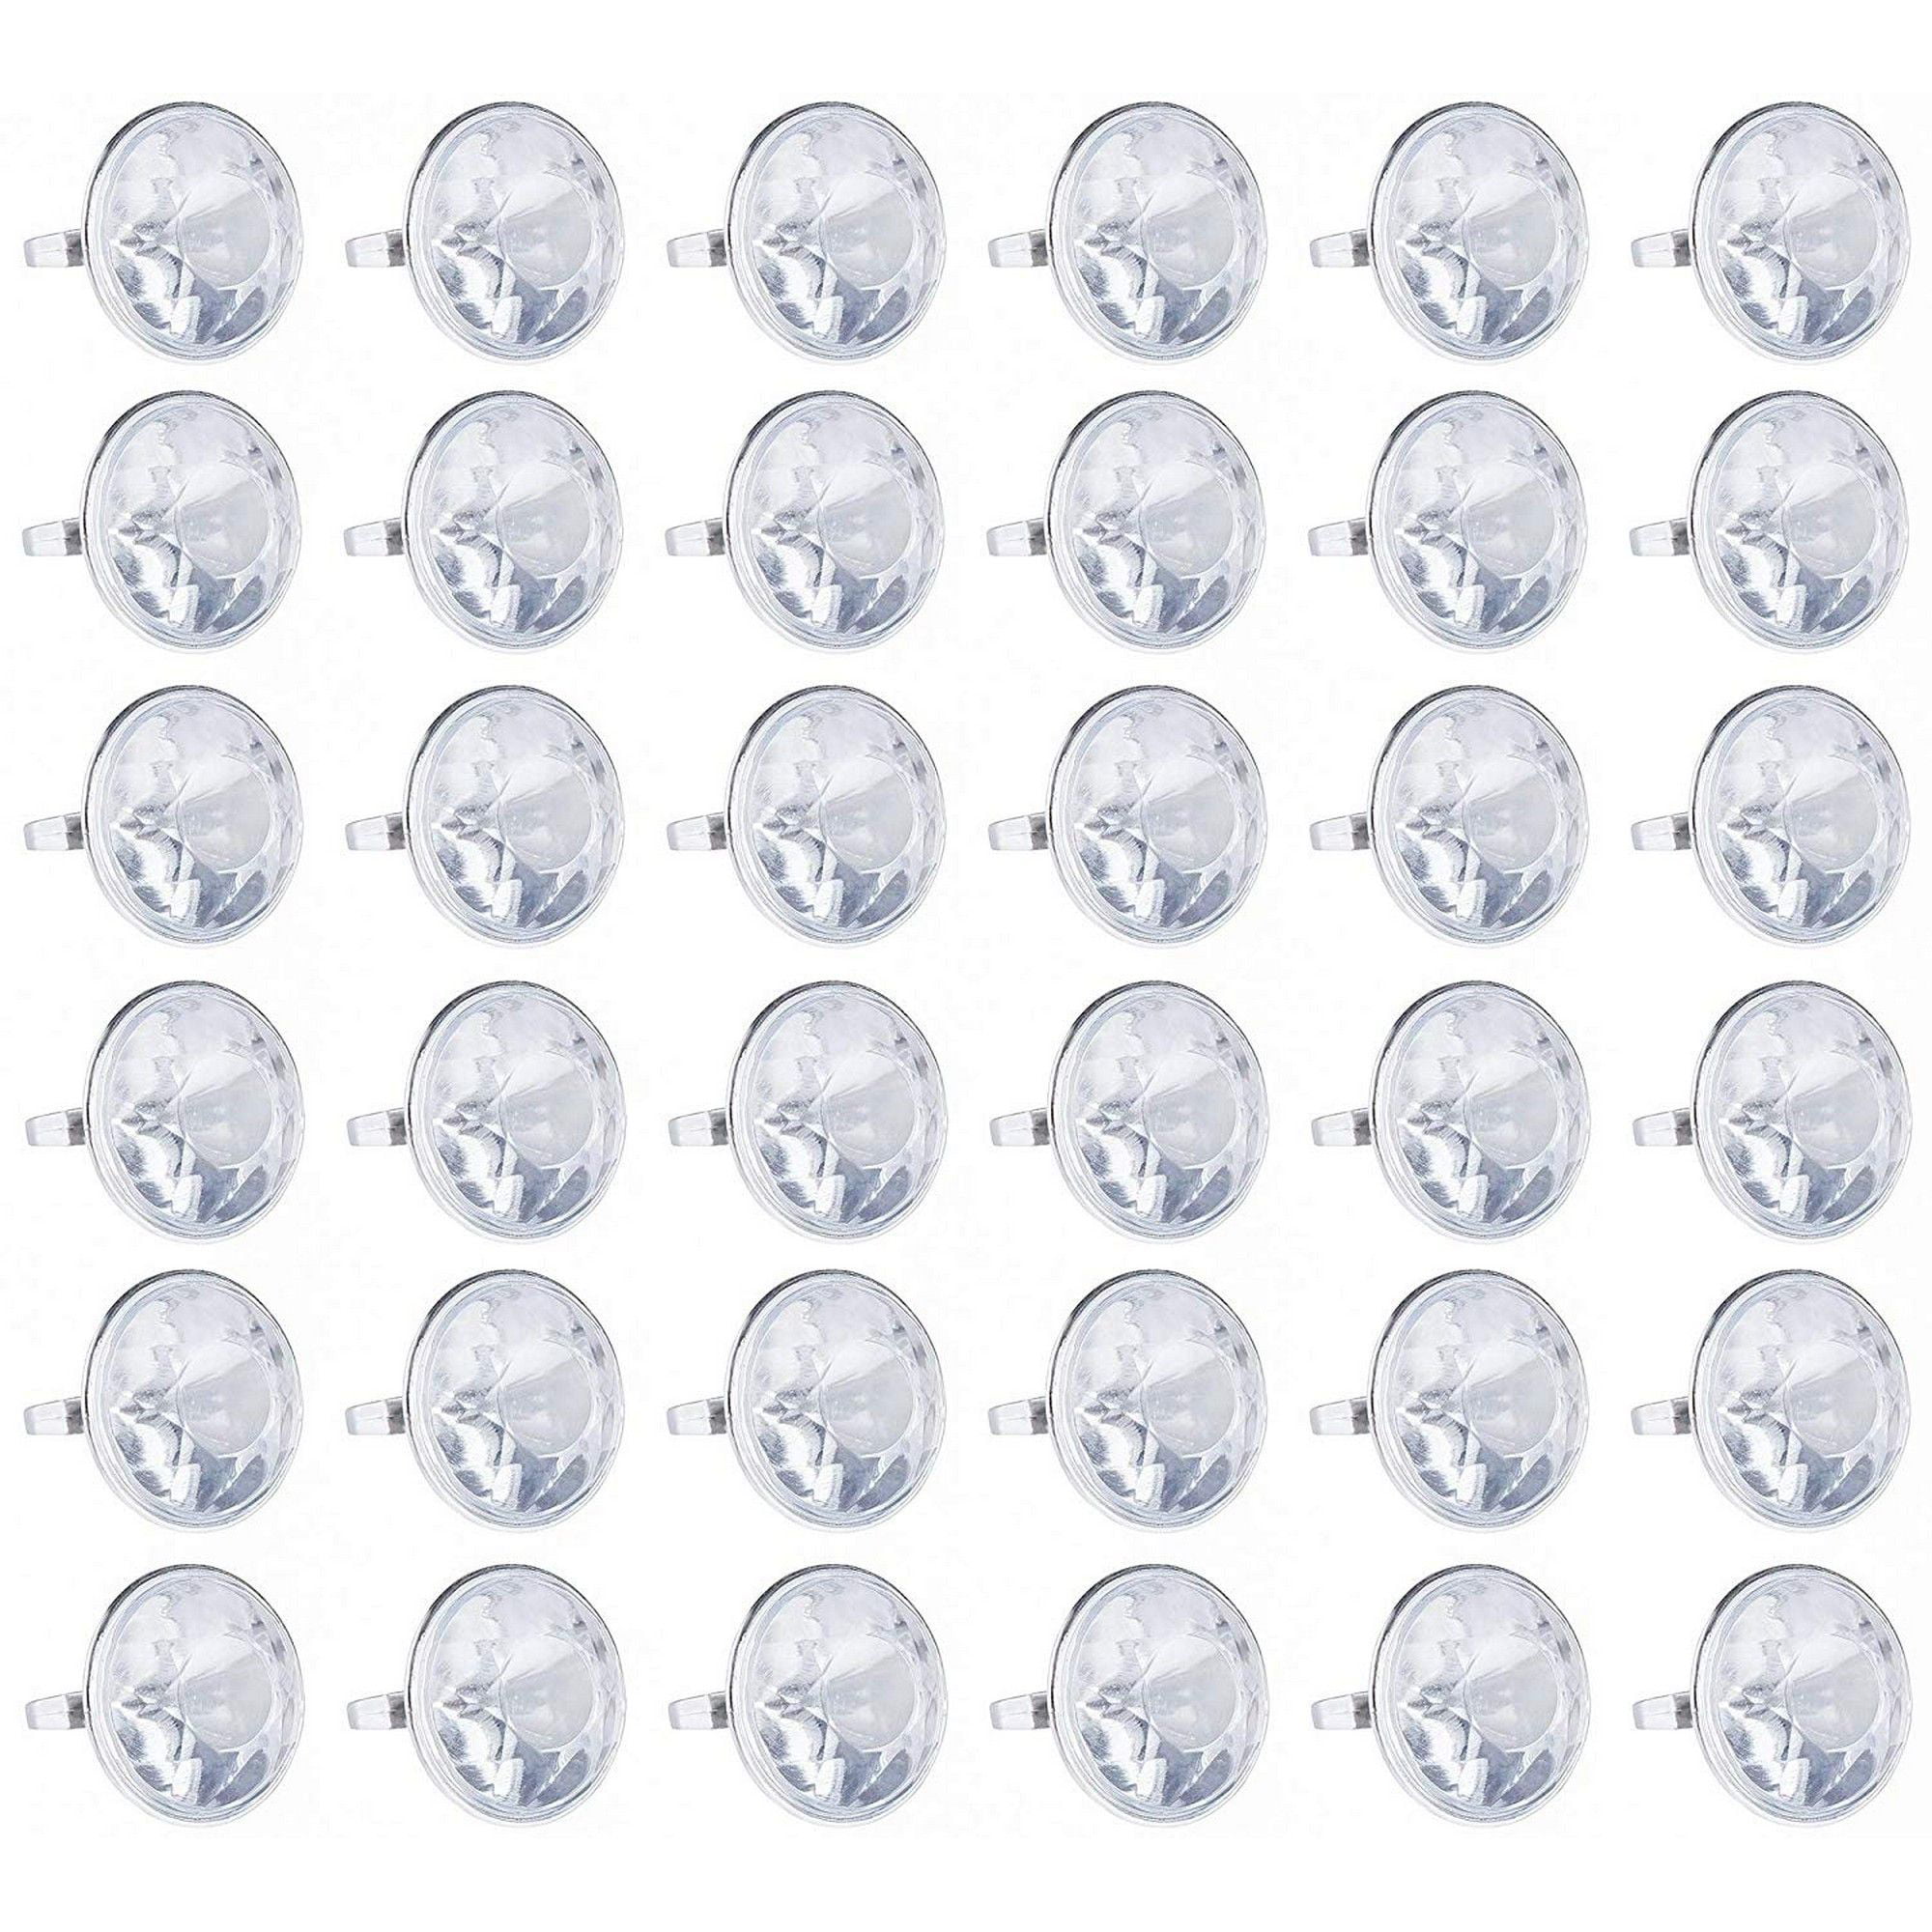 jollylife 800 Diamond Table Confetti Wedding Bridal Shower Party Decorations 4 Carat/ 10mm Clear J001A001C211 